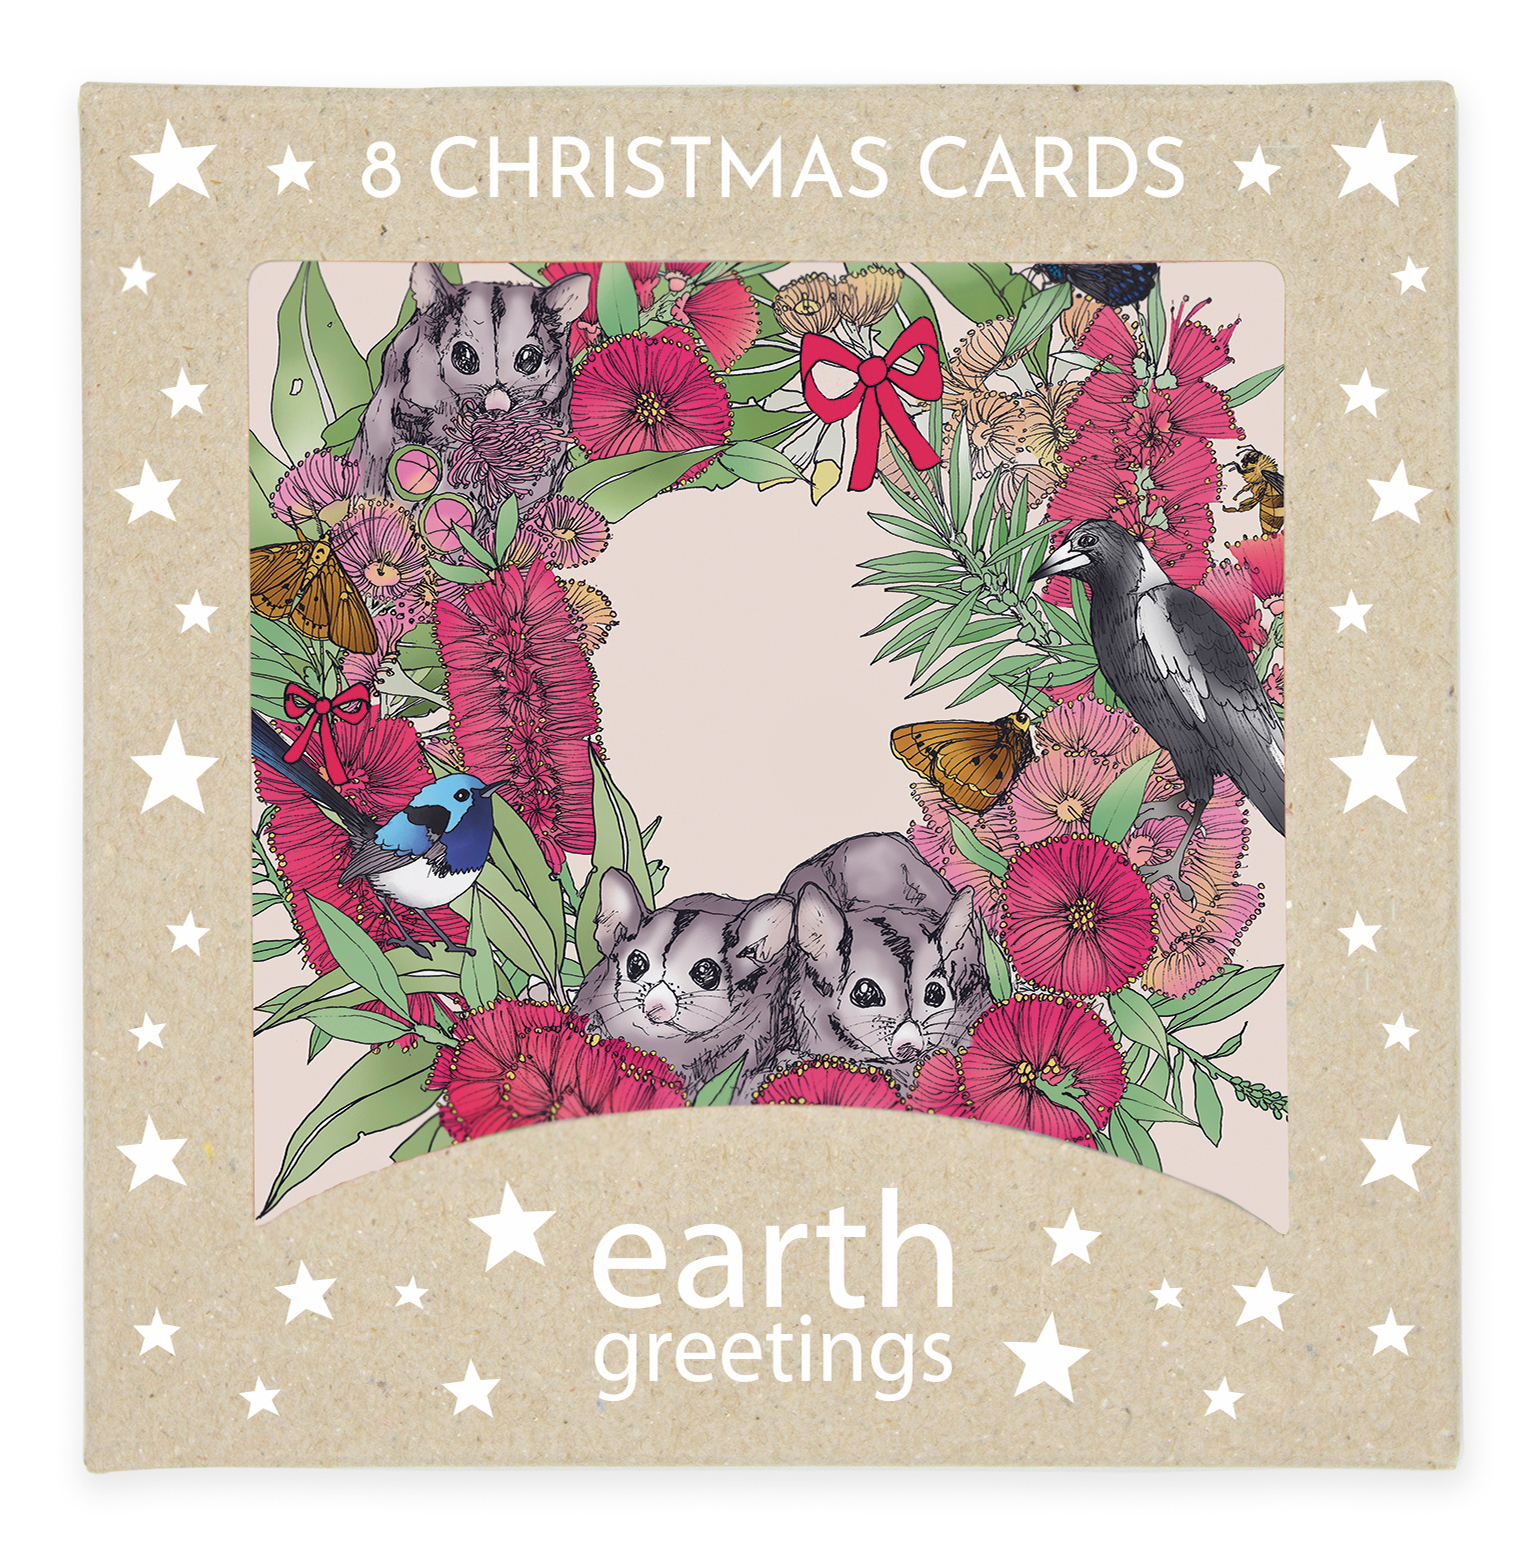 Boxed Christmas Cards (Square) - Flourishing Wreath